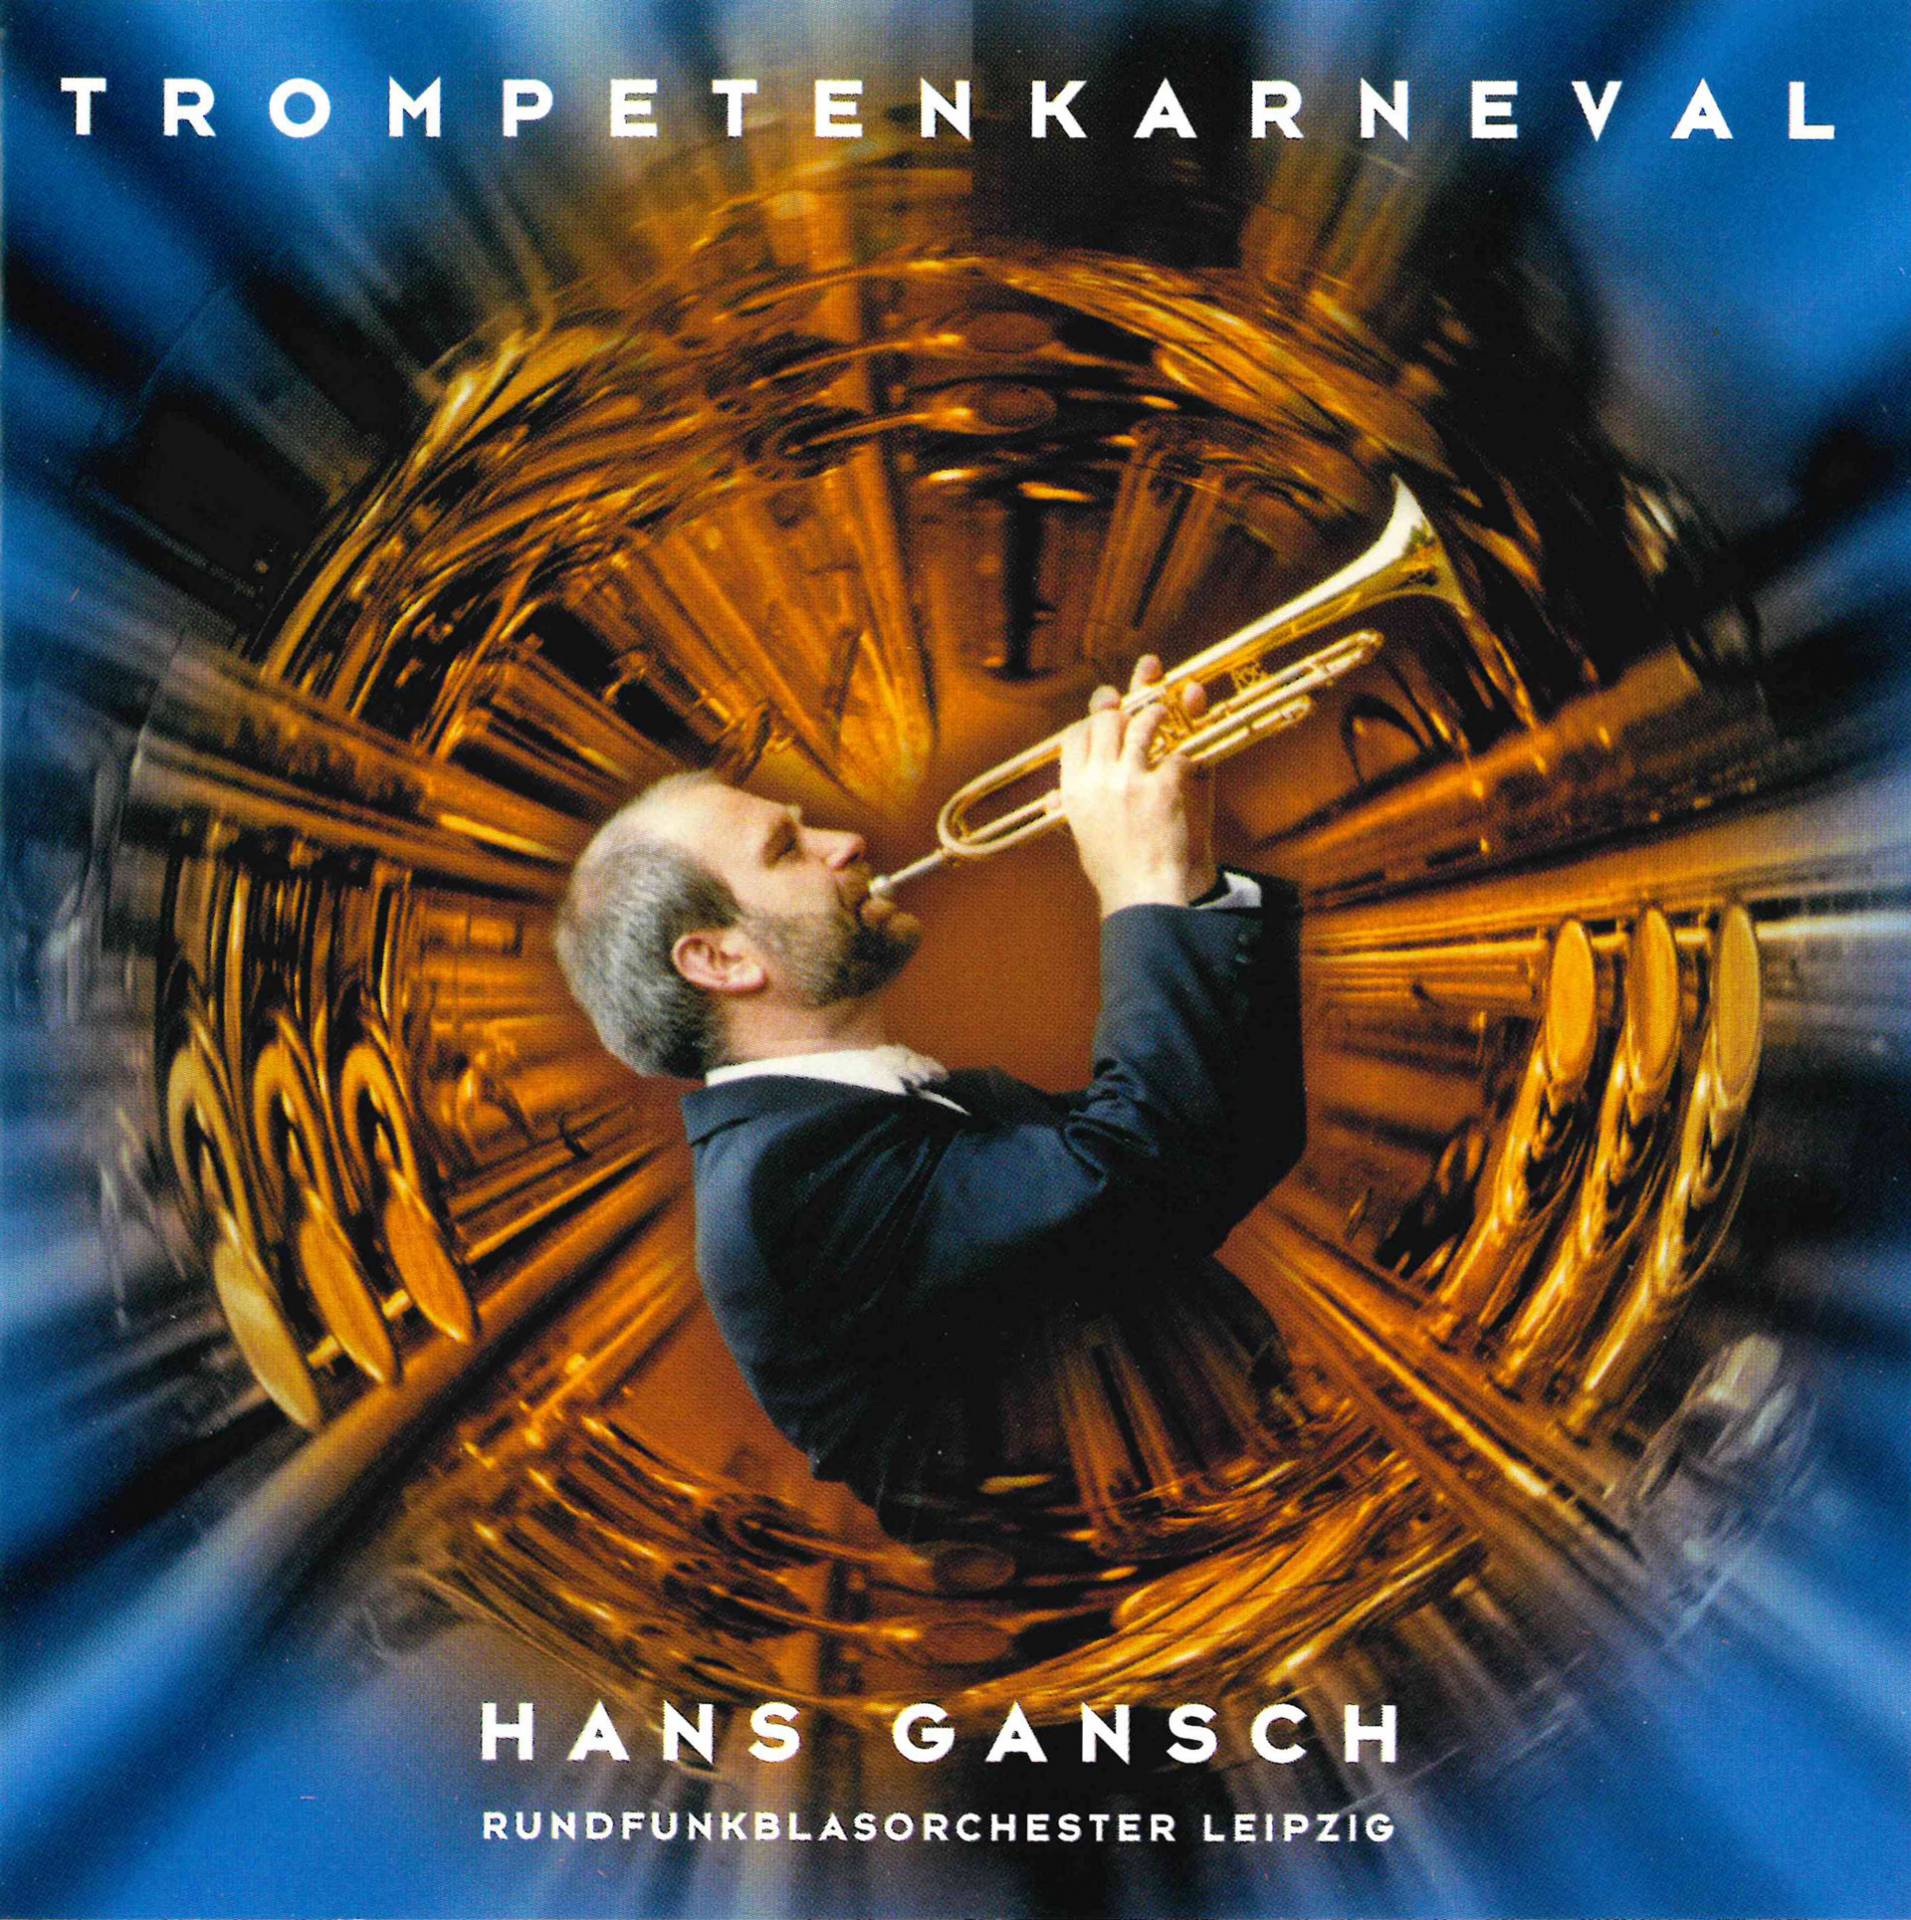 Hans Gansch - Trompetenkarneval